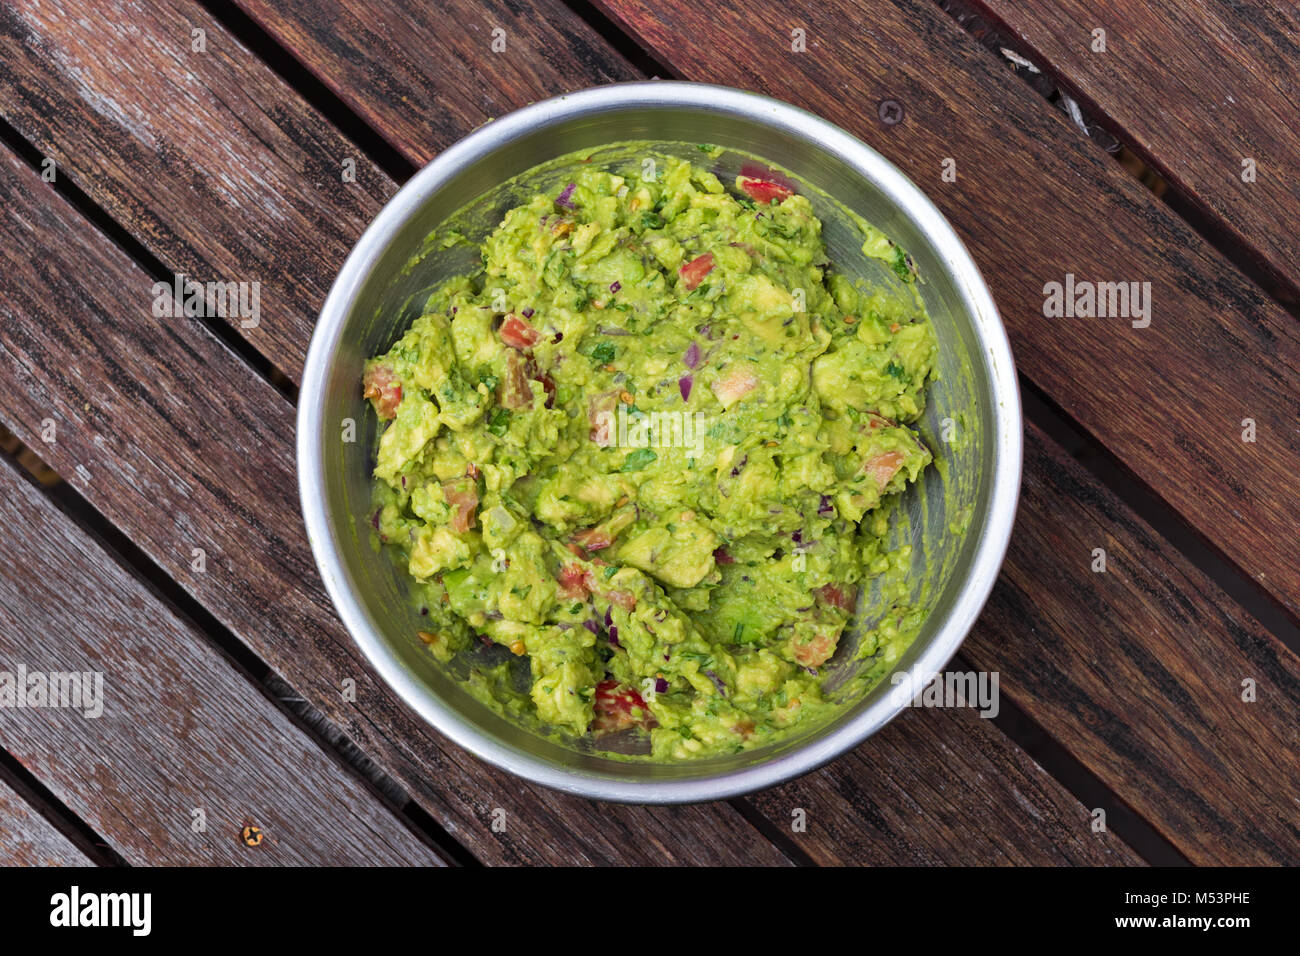 Making a big bowl of avocado guacamole Stock Photo - Alamy